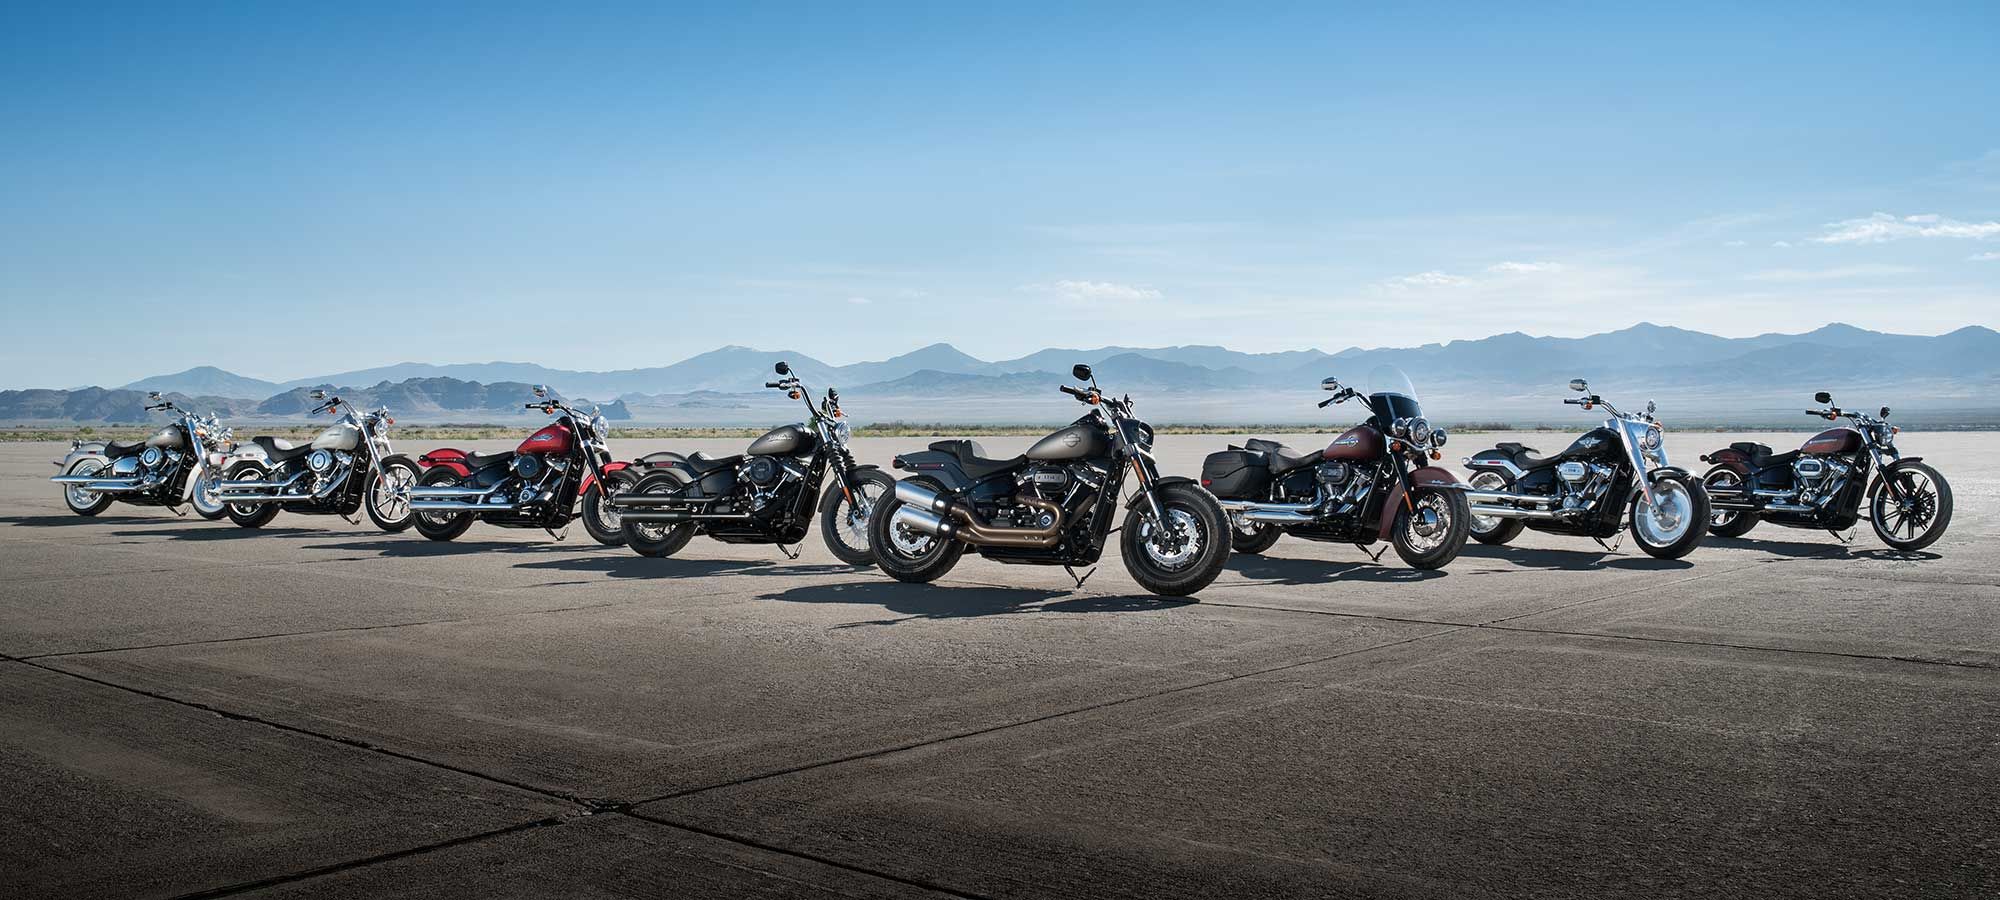 2018 Harley Davidson Softail Cruiser Lineup Cycle World